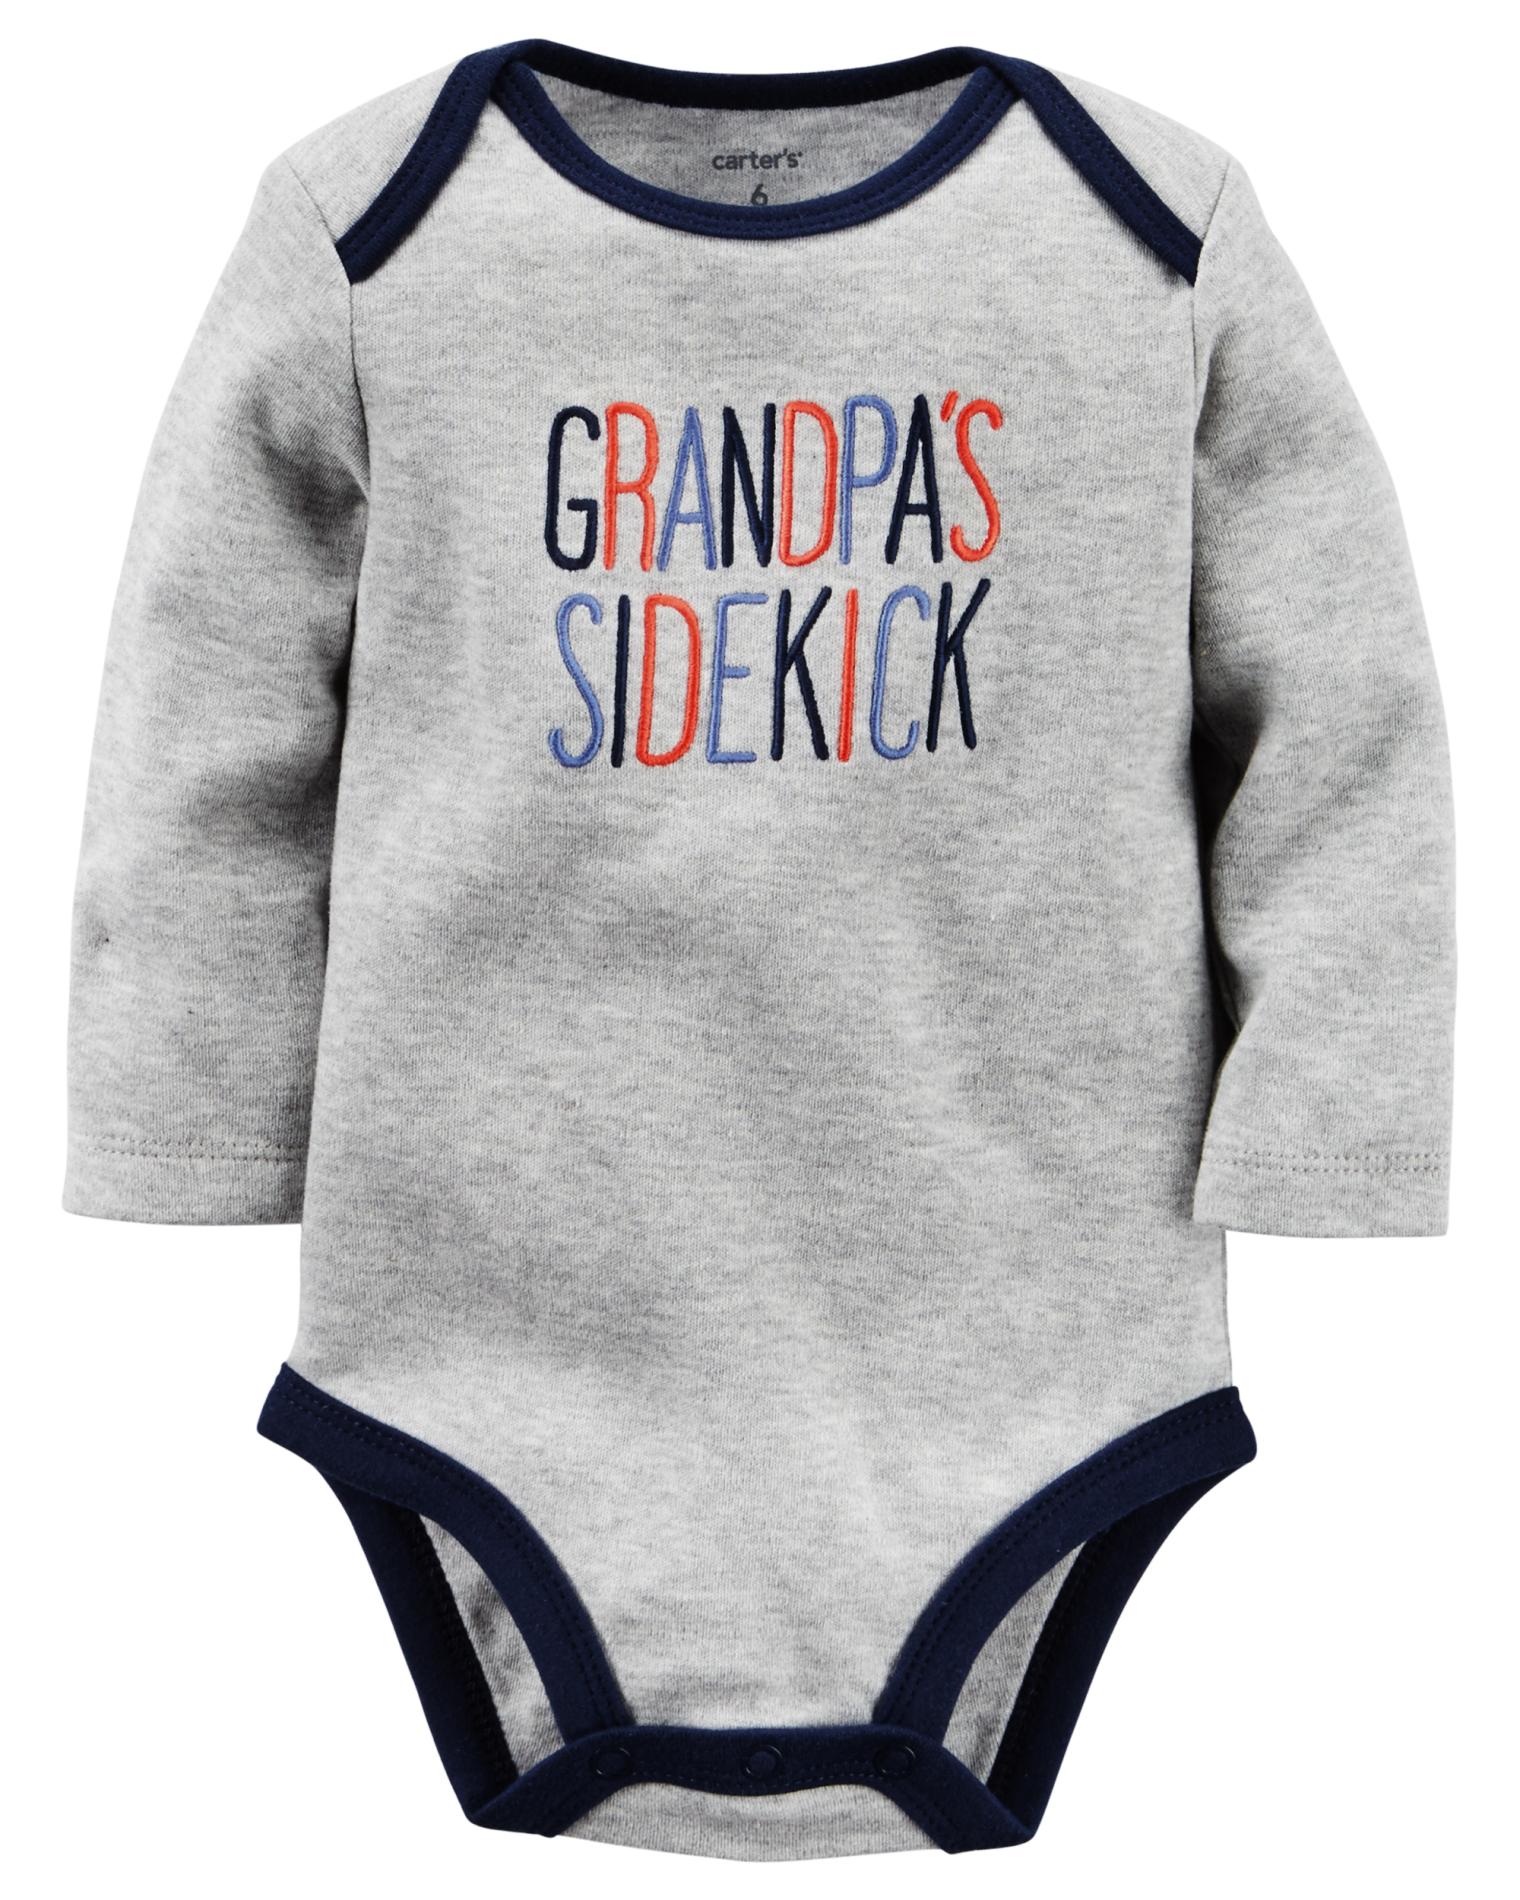 Carter's Newborn & Infant Boys' Long-Sleeve Bodysuit - Grandpa's Sidekick